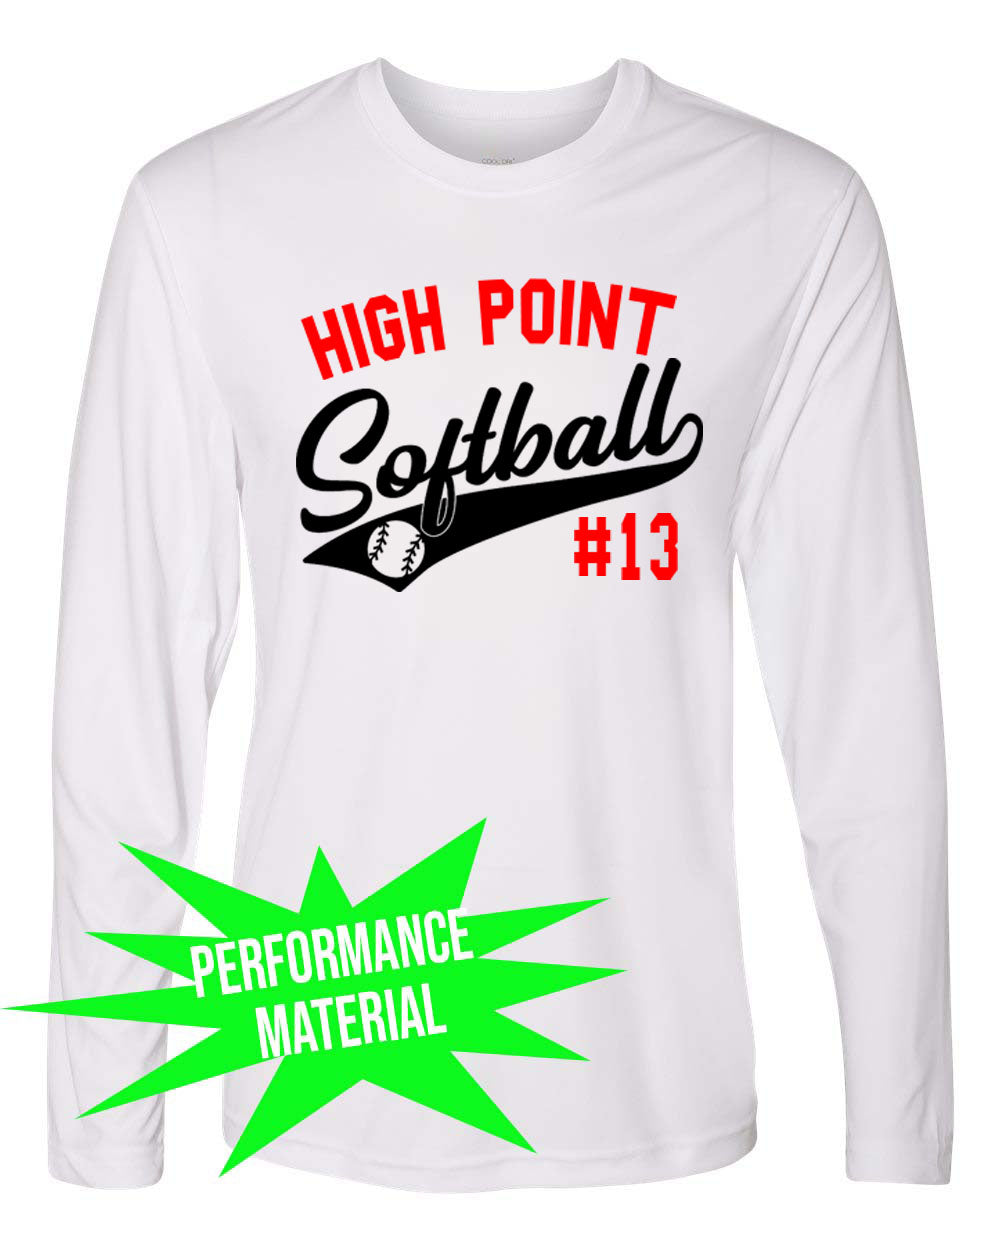 High Point Softball Performance Material Design 2 Long Sleeve Shirt